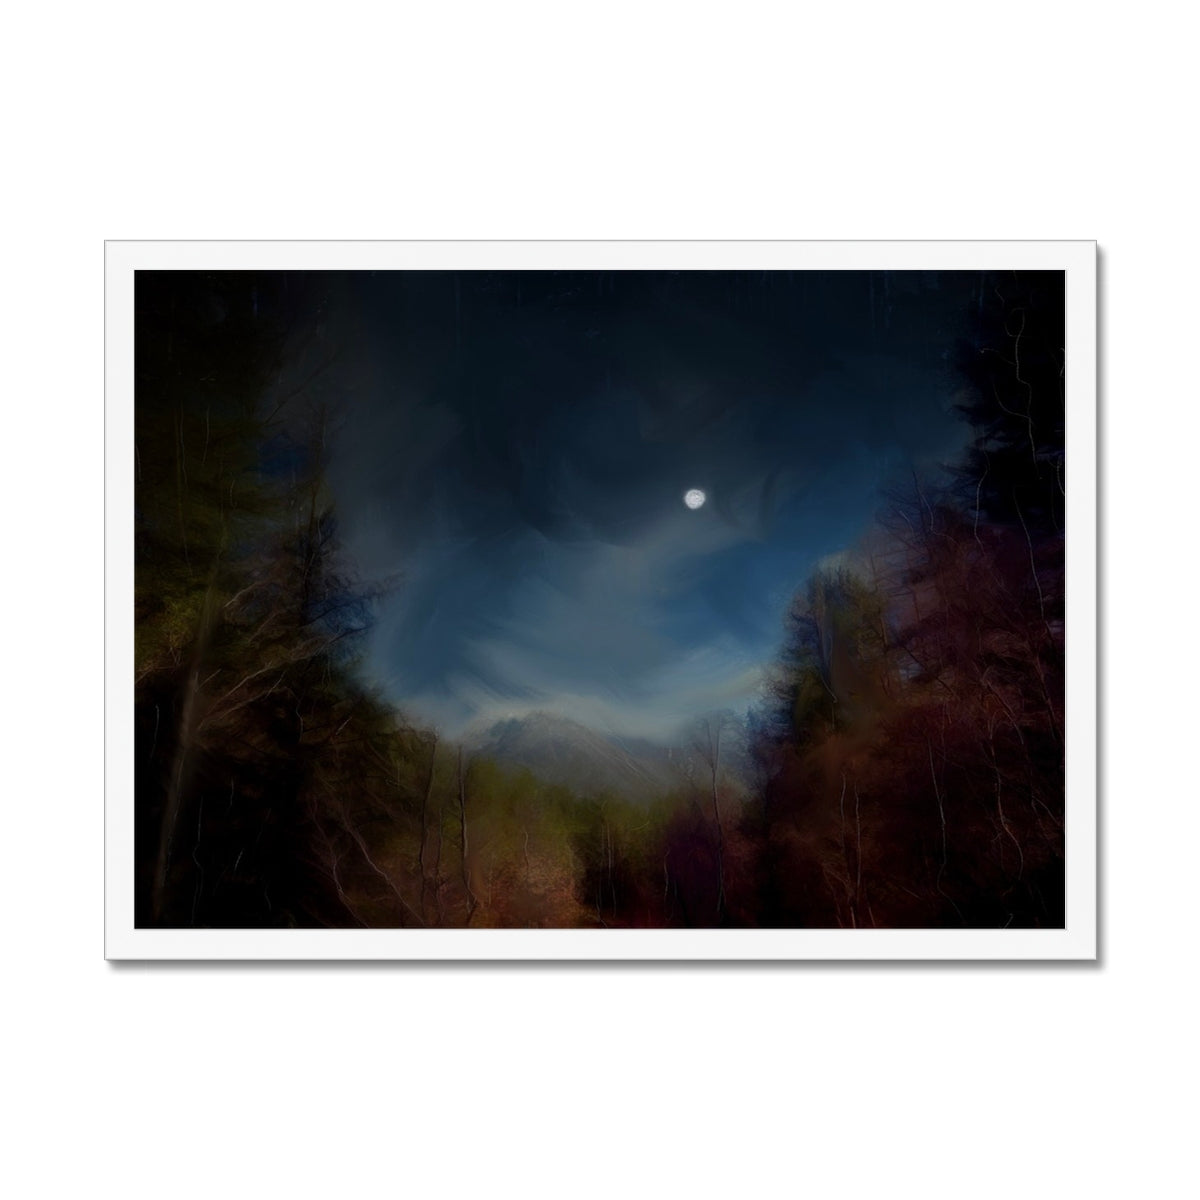 Glencoe Lochan Moonlight Painting | Framed Prints From Scotland-Framed Prints-Scottish Lochs & Mountains Art Gallery-A2 Landscape-White Frame-Paintings, Prints, Homeware, Art Gifts From Scotland By Scottish Artist Kevin Hunter